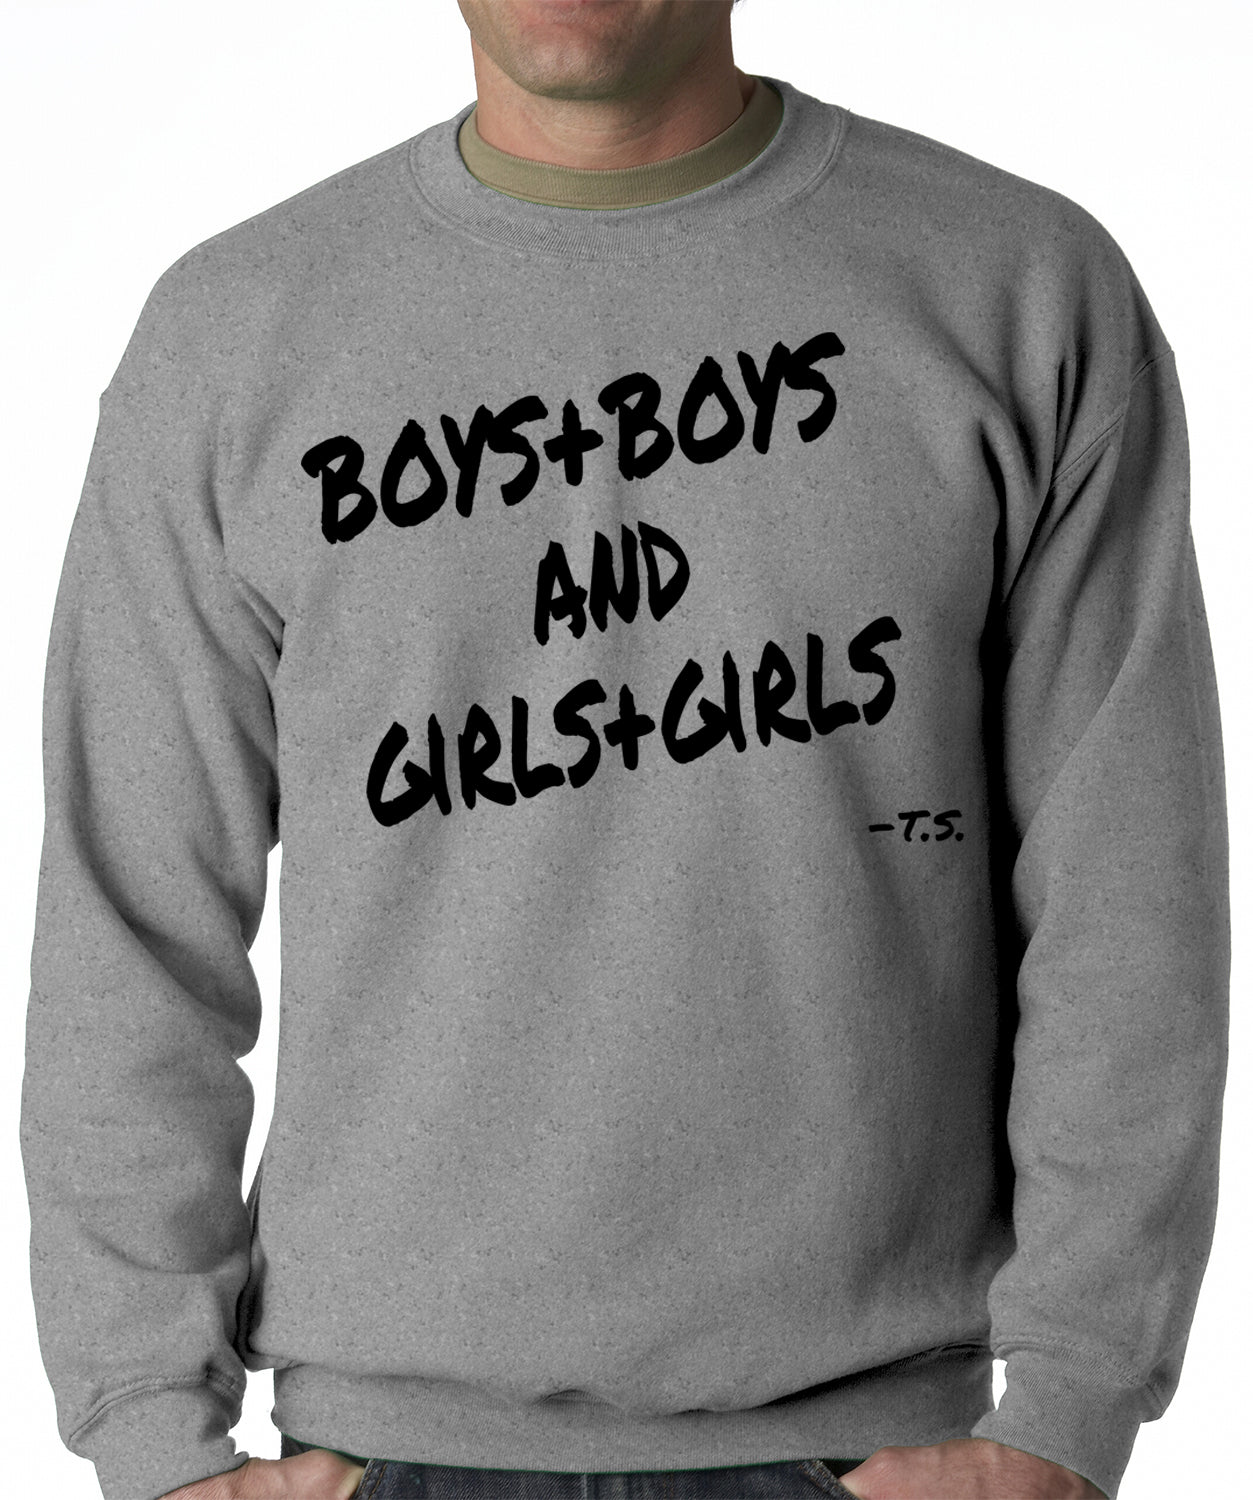 Boys + Boys And Girls + Girls Crewneck Sweatshirt